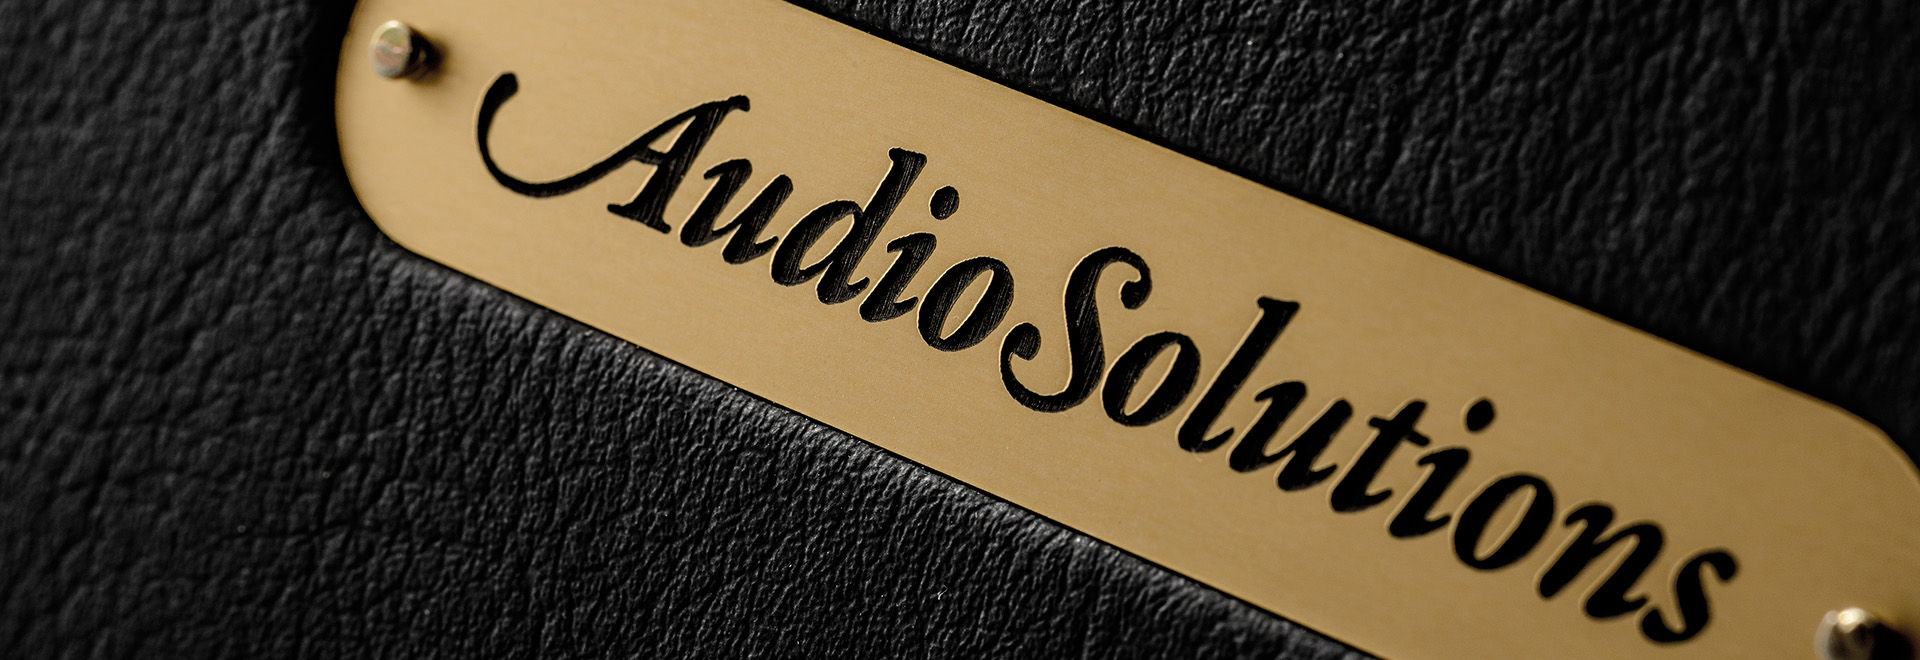 audio solutions 